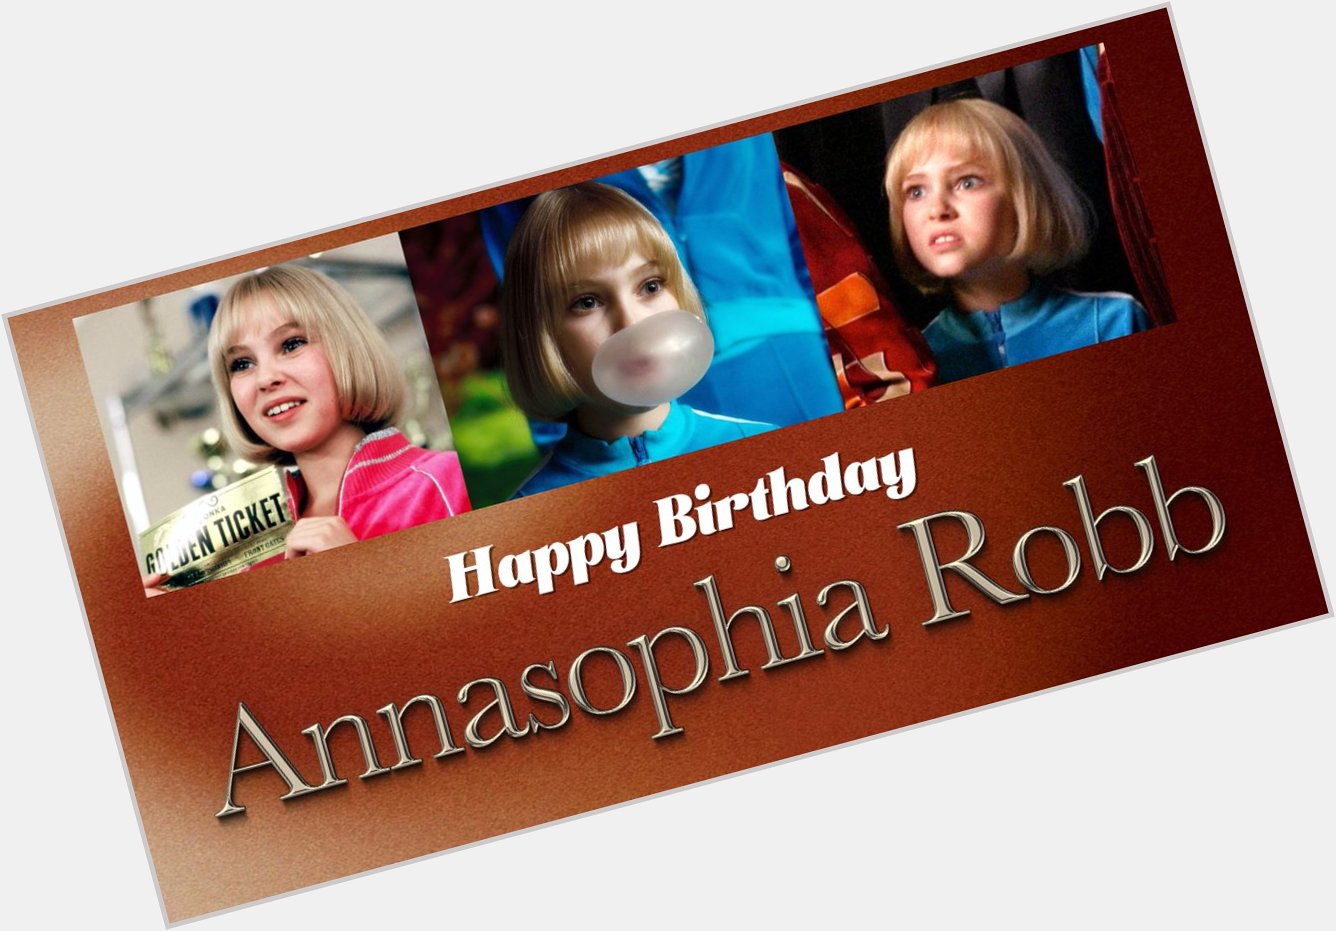 Happy birthday to AnnaSophia Robb ( who turns 28 today! 